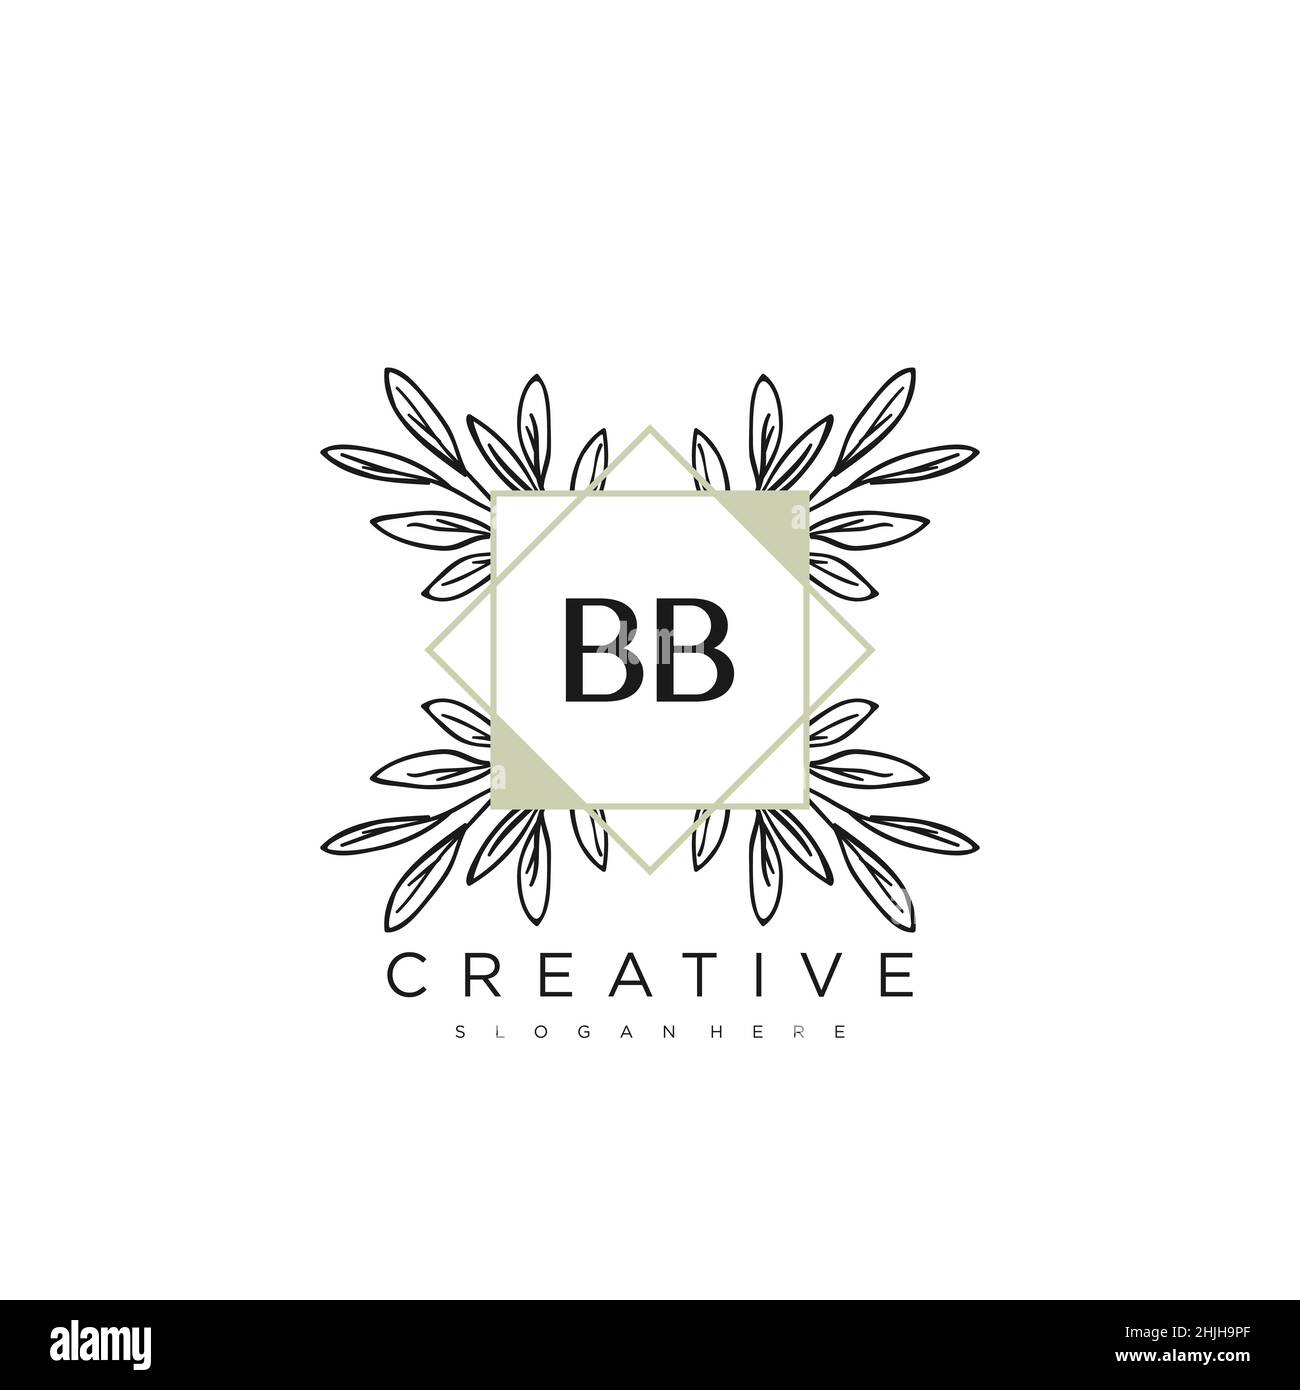 BB Initial Letter Flower Logo Template Vector premium vector Stock Vector